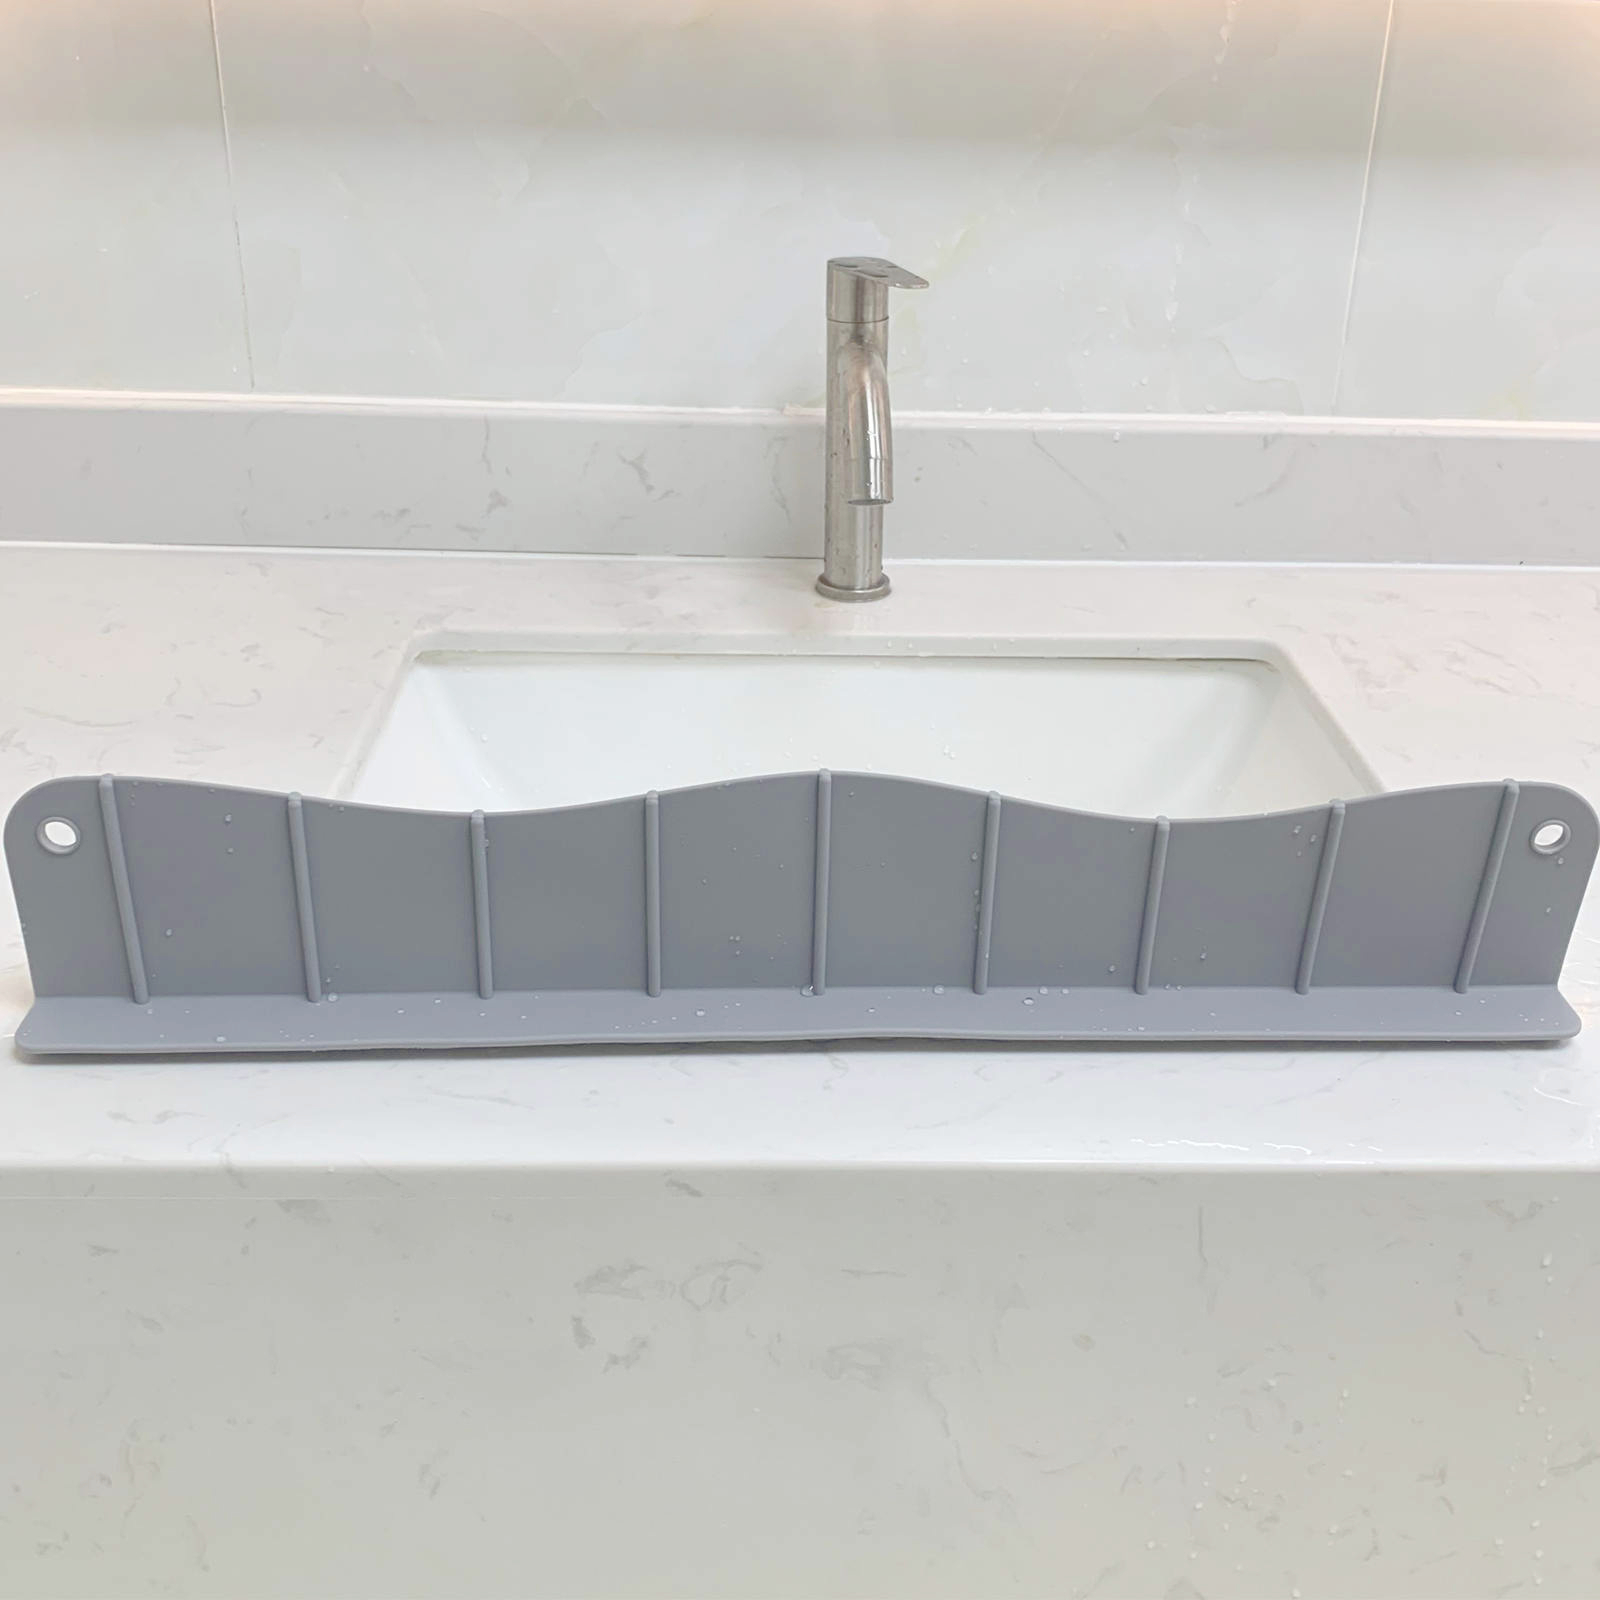 Global Phoenix NewHome Silicone Faucet Mat Kitchen Sink Splash Guard Drain Mat Drying Pad in Black